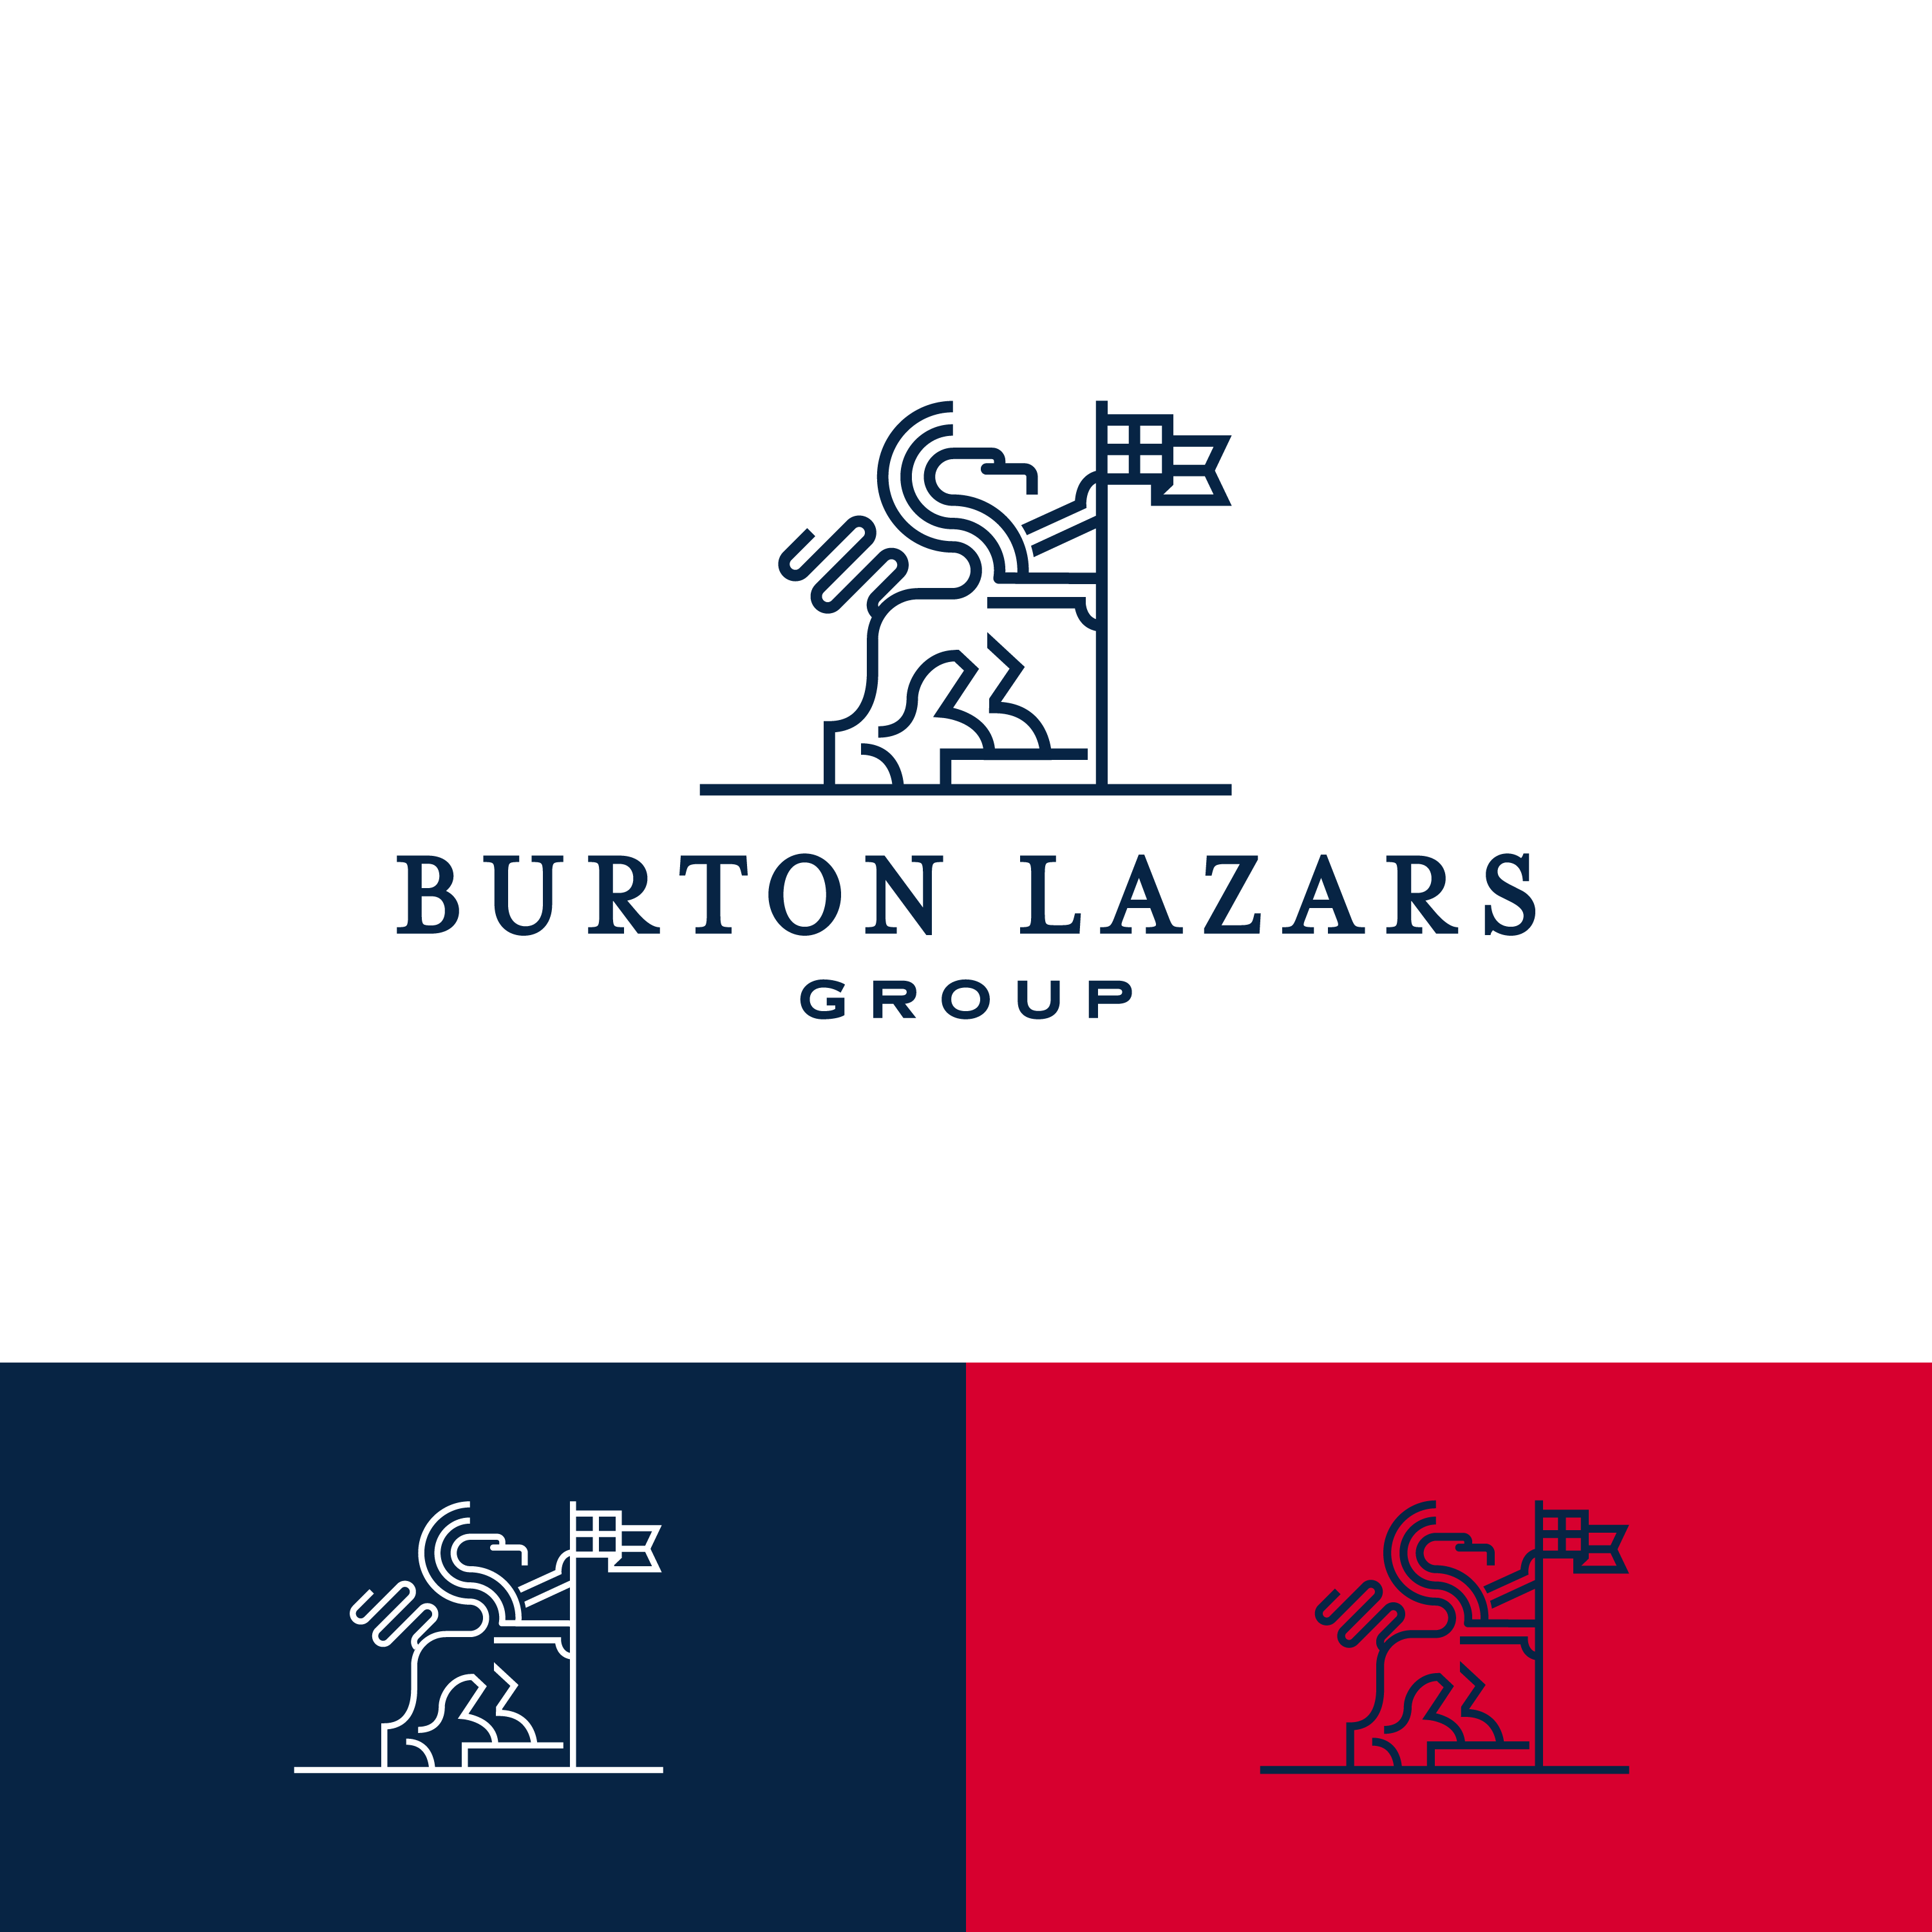 Burton Lazars Group - Logo Identity - Designed by Courtright Design